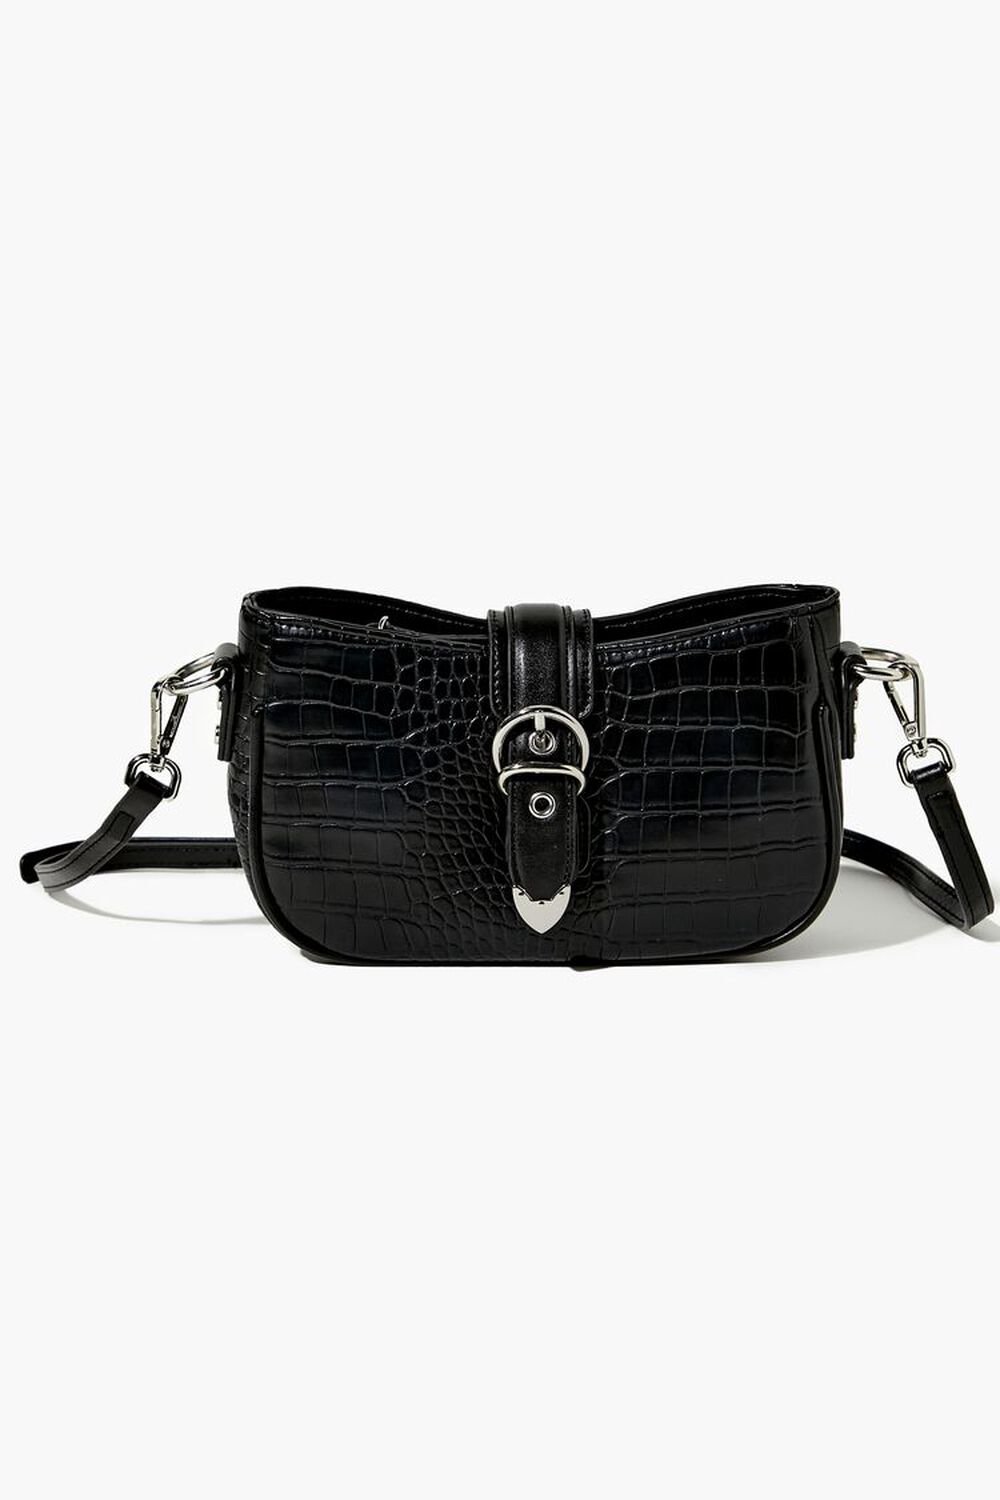 BLACK Faux Croc Leather Crossbody Bag, image 1